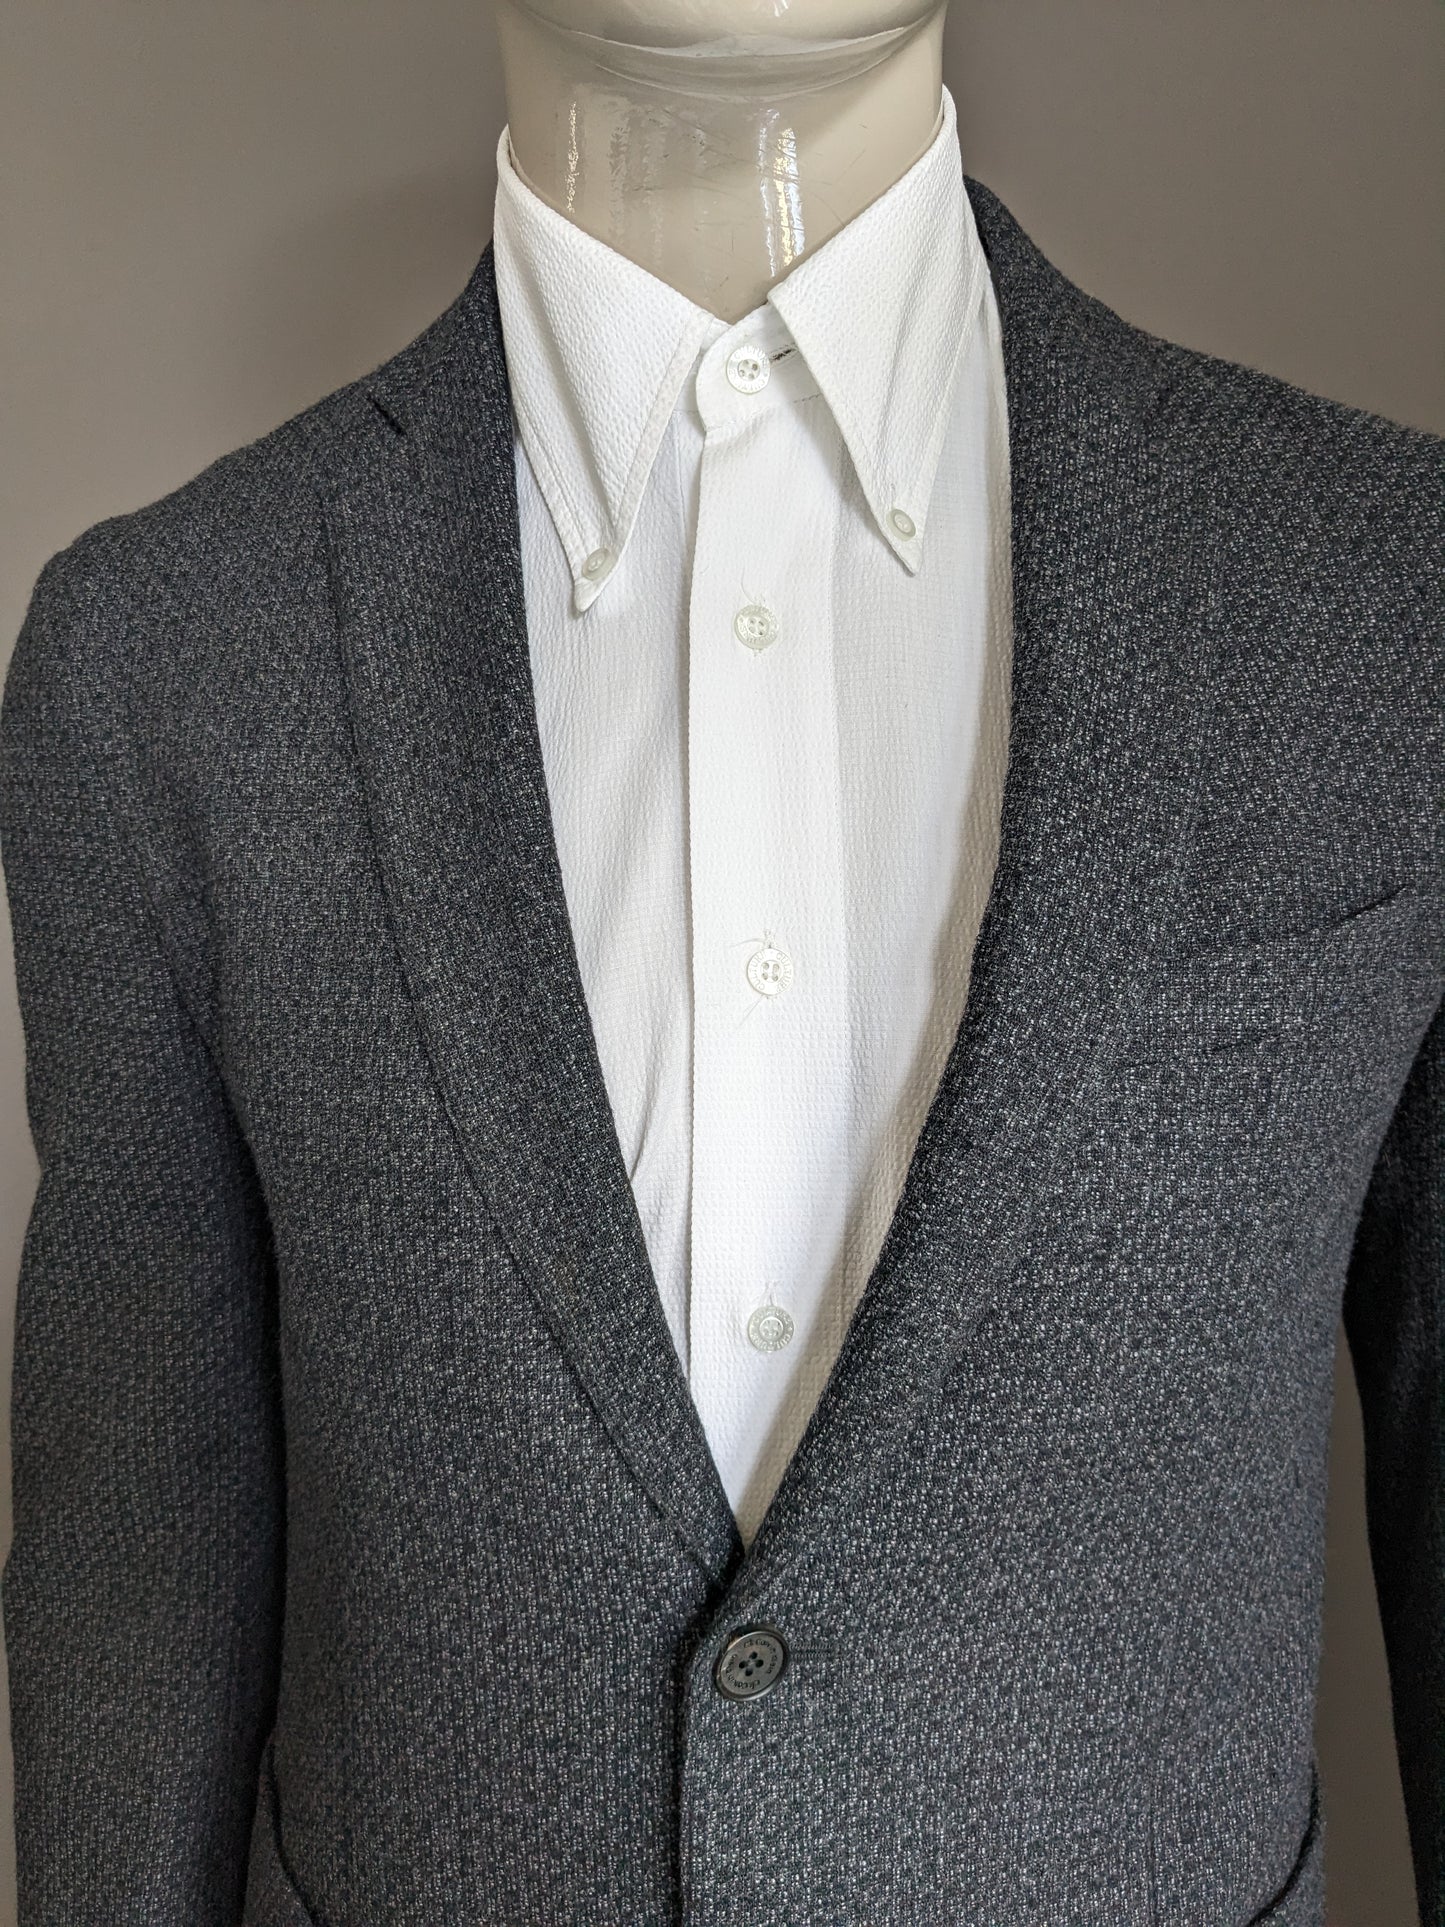 CK Calvin Klein woolen jacket. Gray black mixed motif. Size 50 / M. Slim Fit Line.